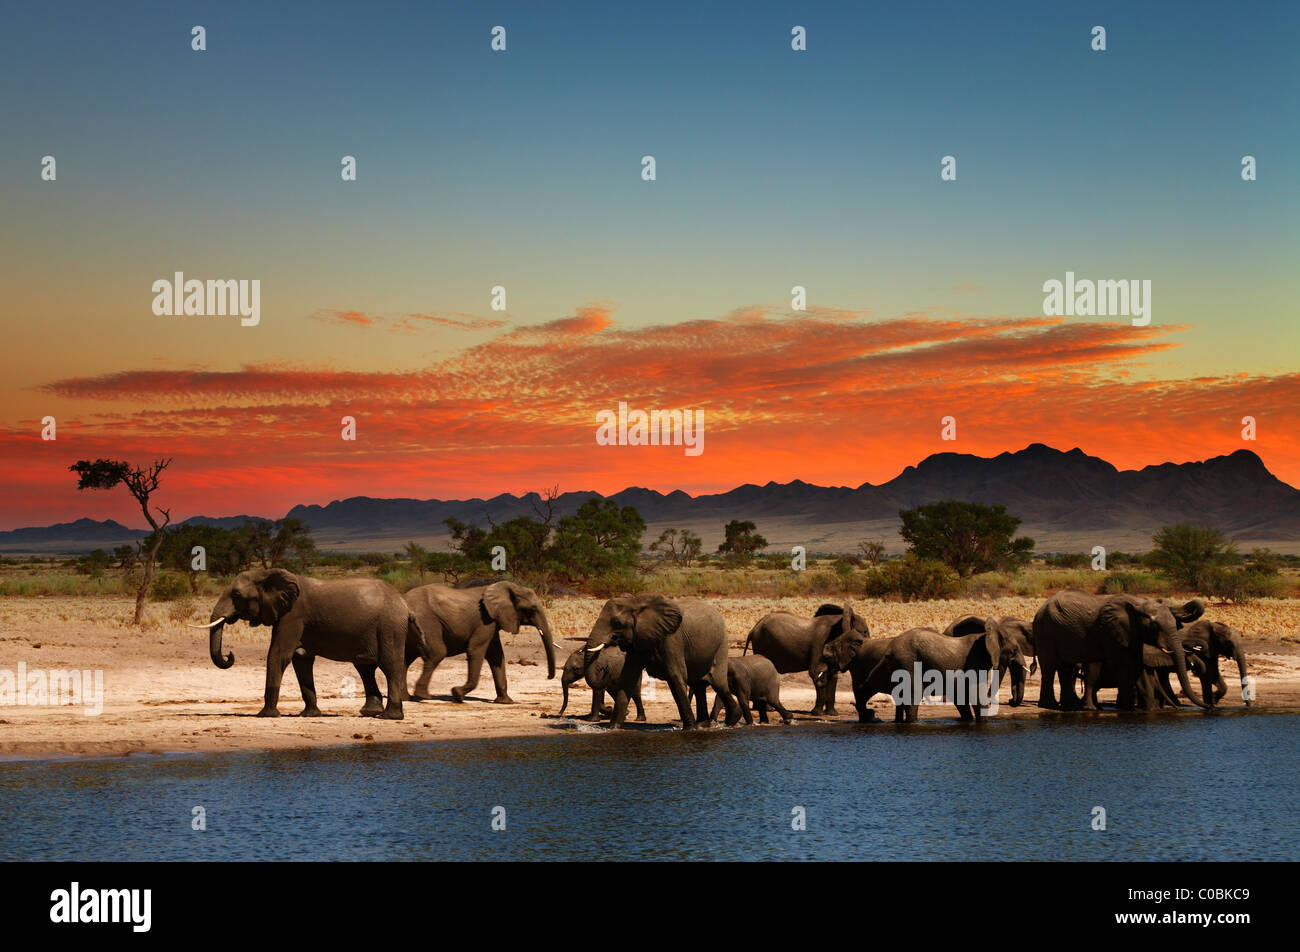 Herd of elephants in african savanna at sunset Stock Photo